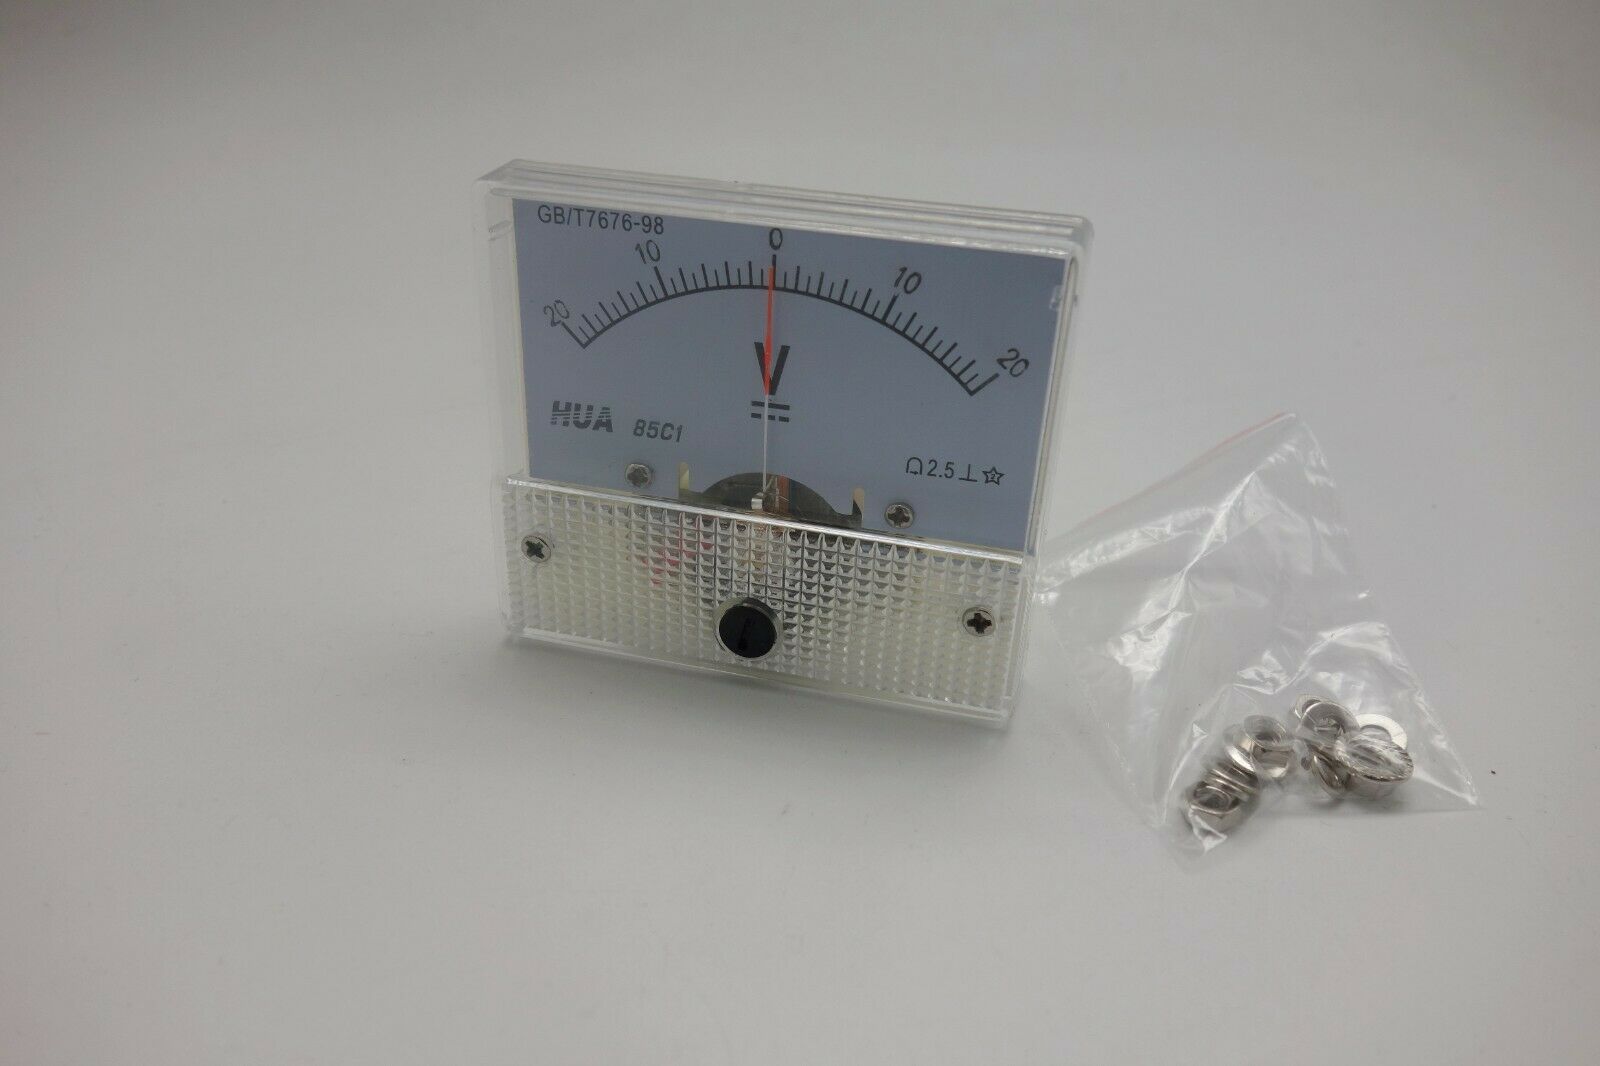 DC Minus Zero Plus -20V-+20V Analog 85C1 56*64mm Voltage Analogue Panel meter